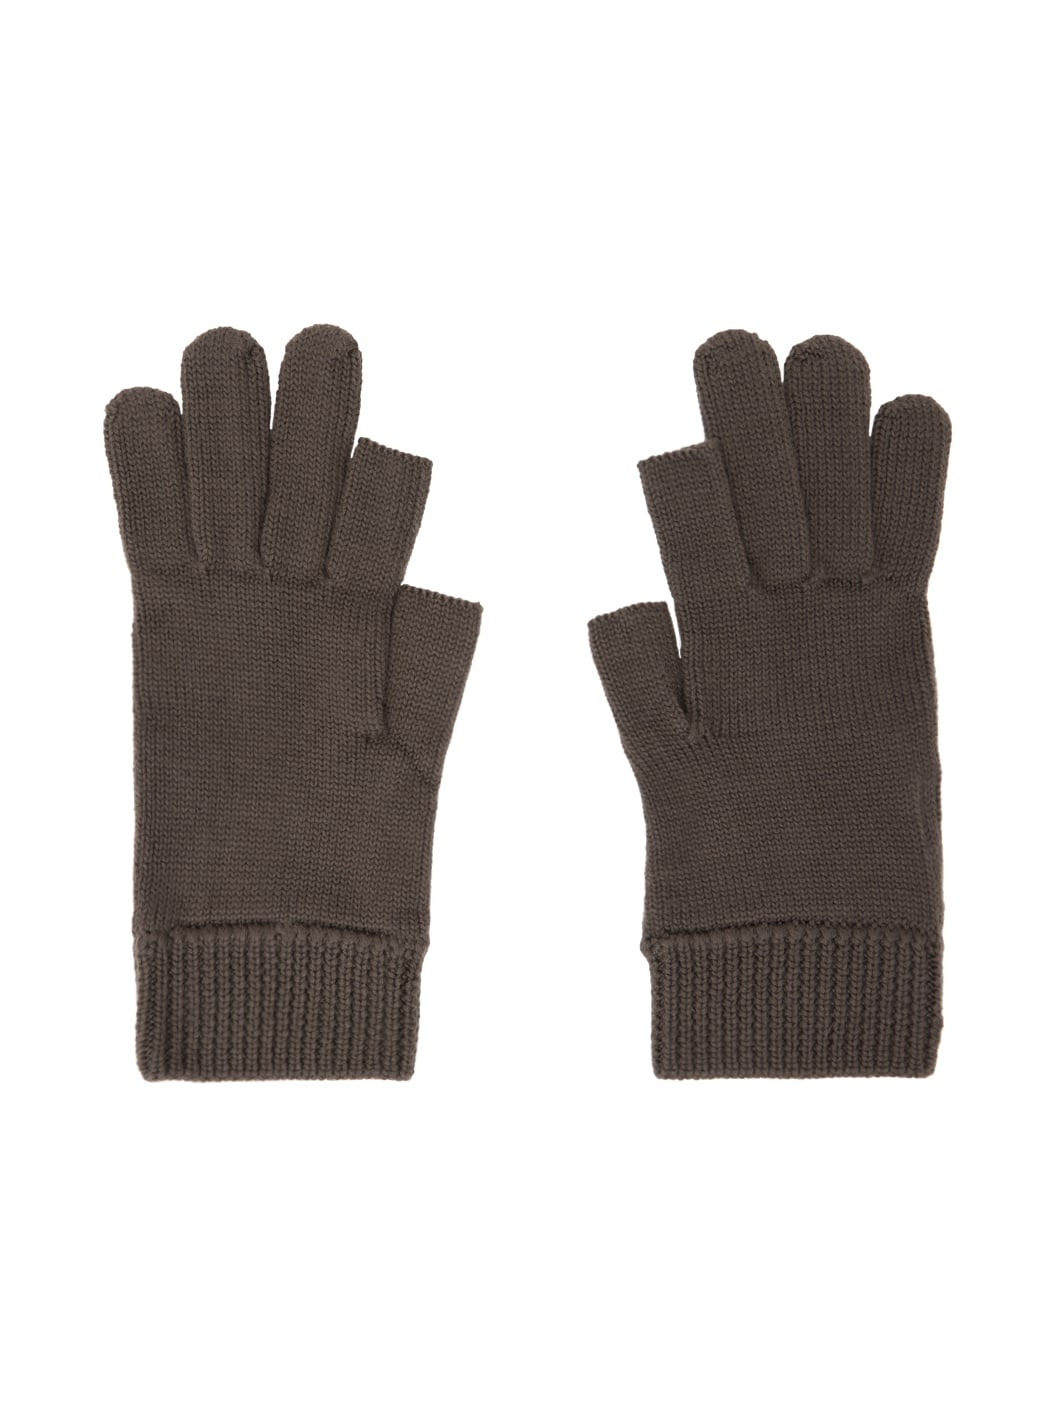 Gray Touchscreen Gloves - 2